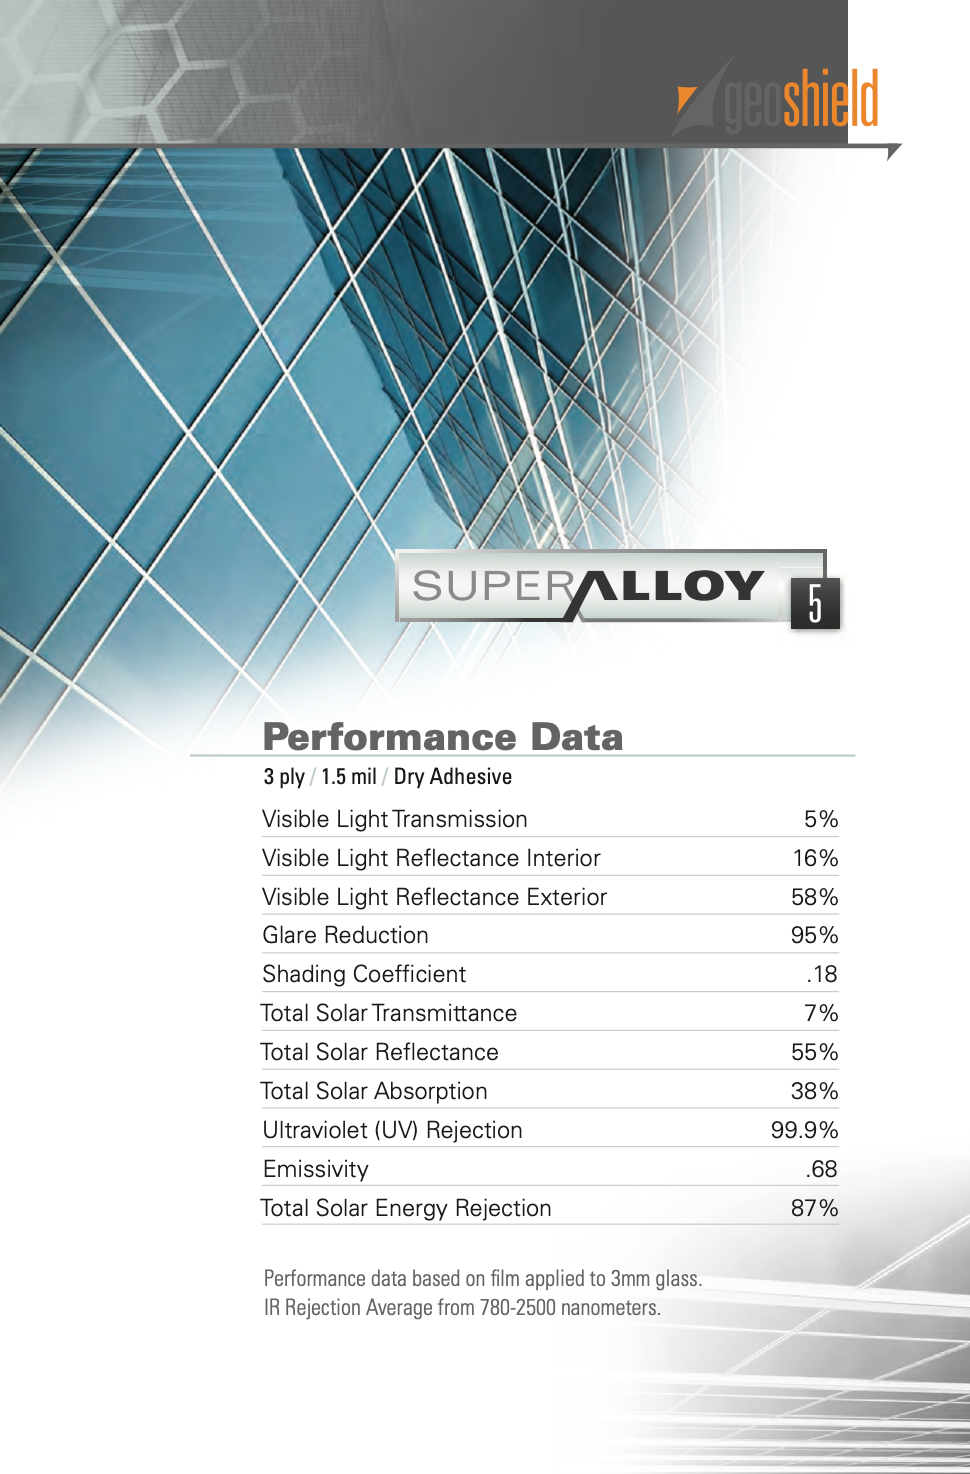 Performance data for Super Alloy 5%